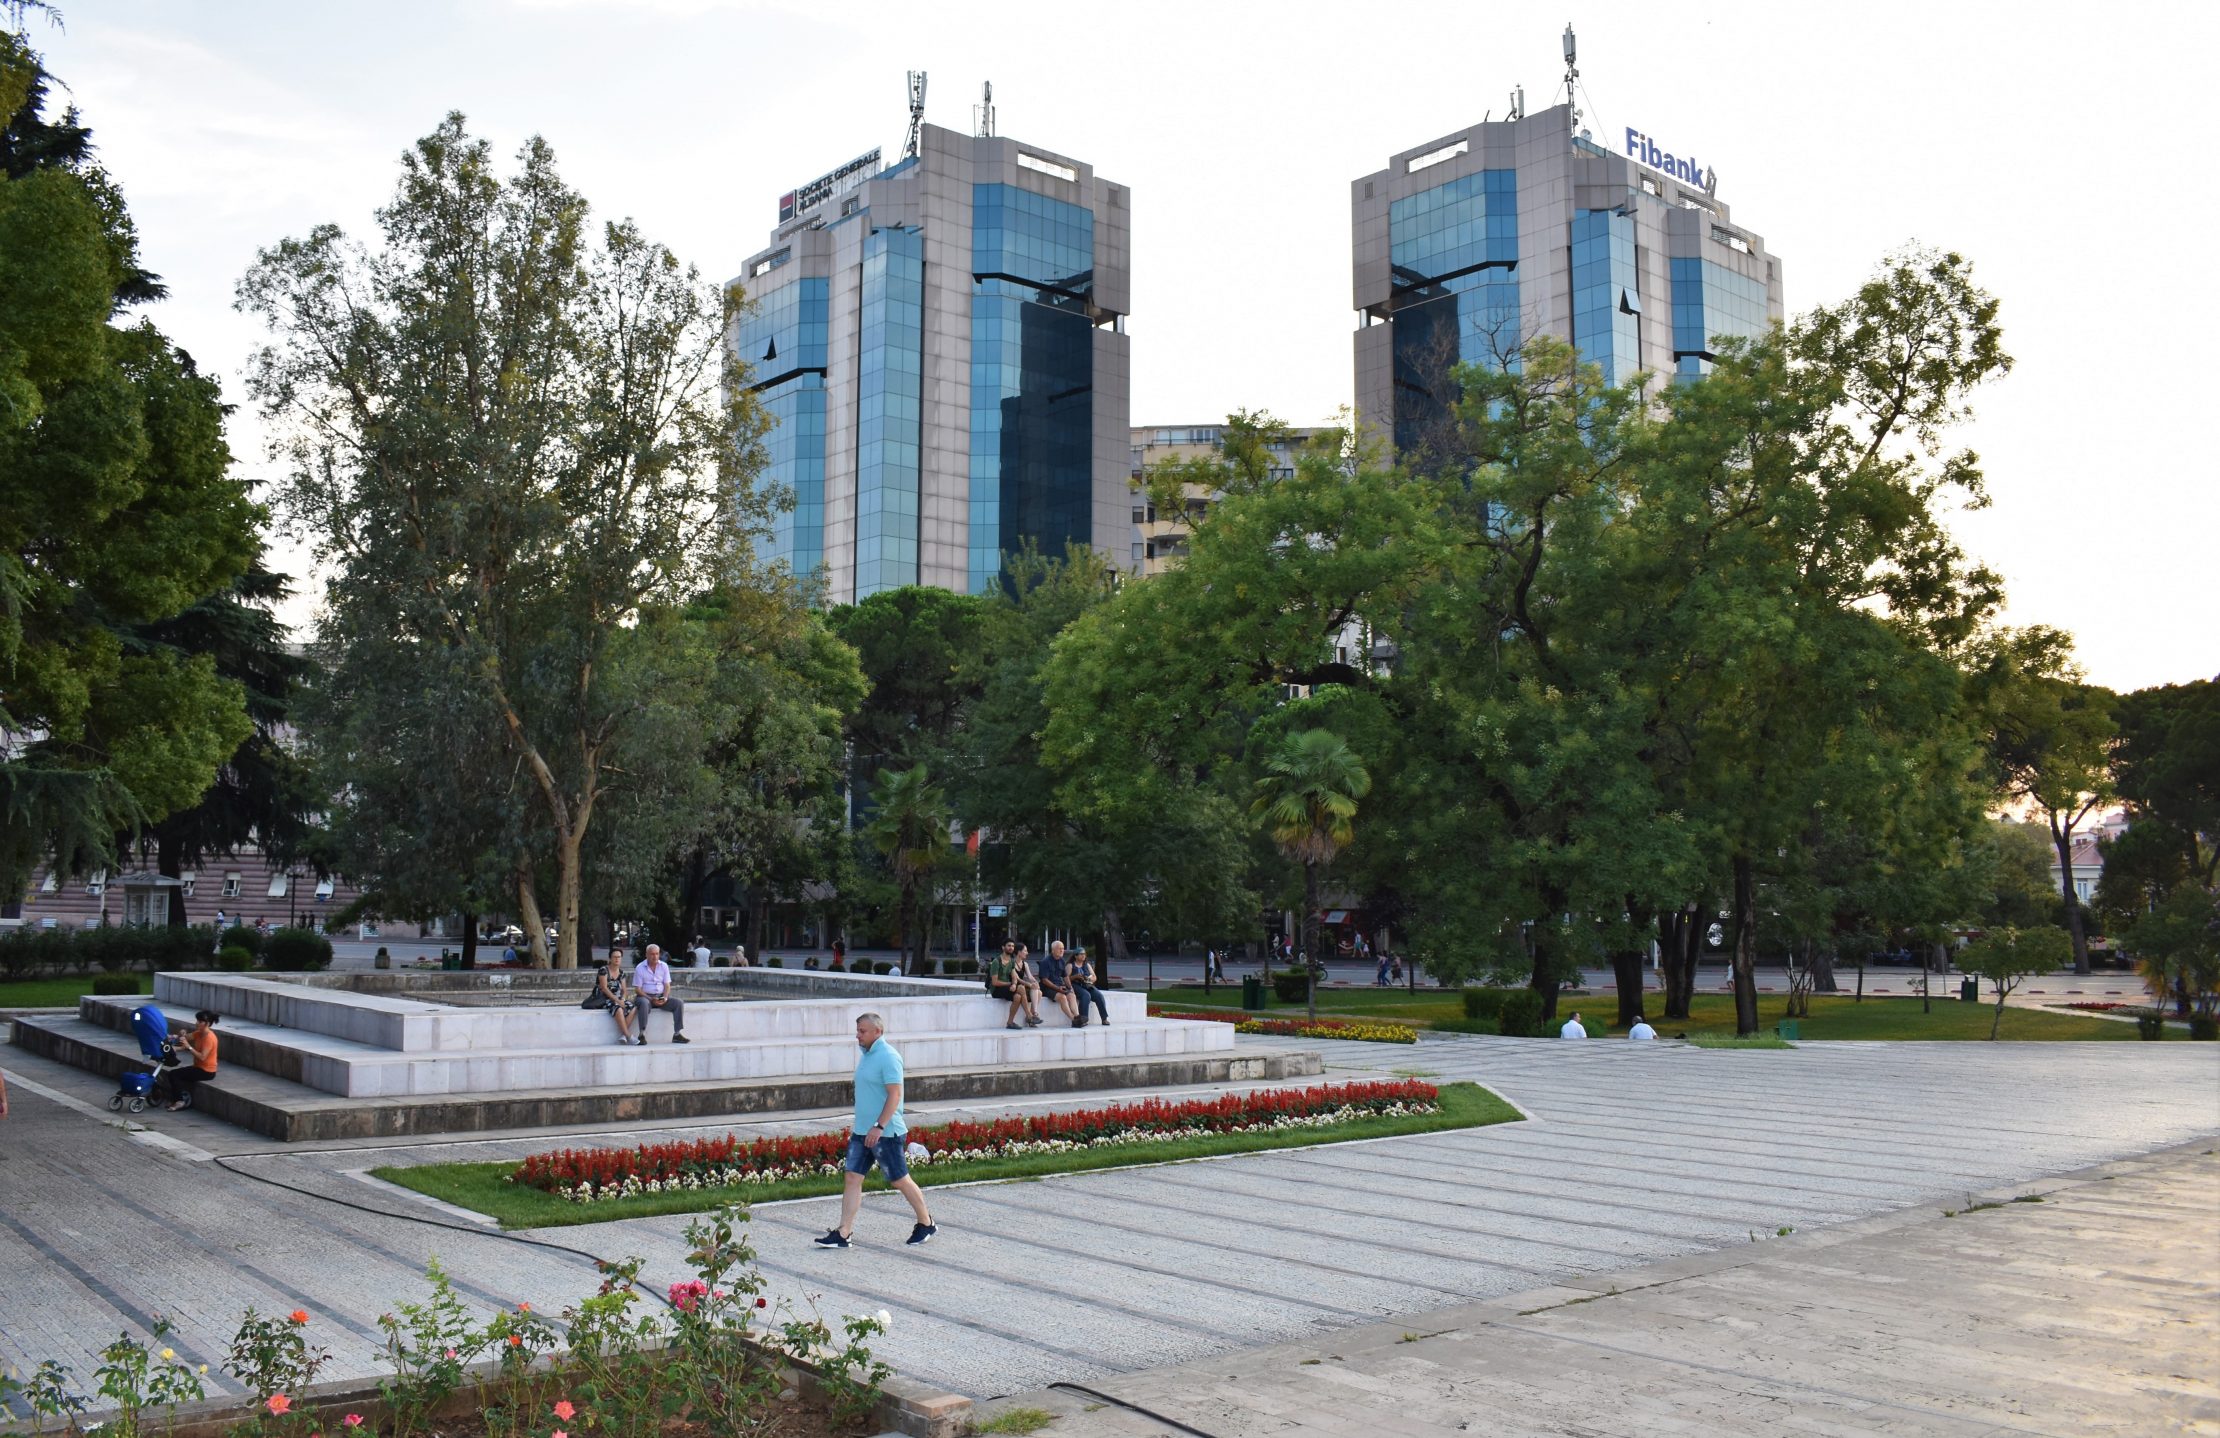 Banks in Tirana, Albania